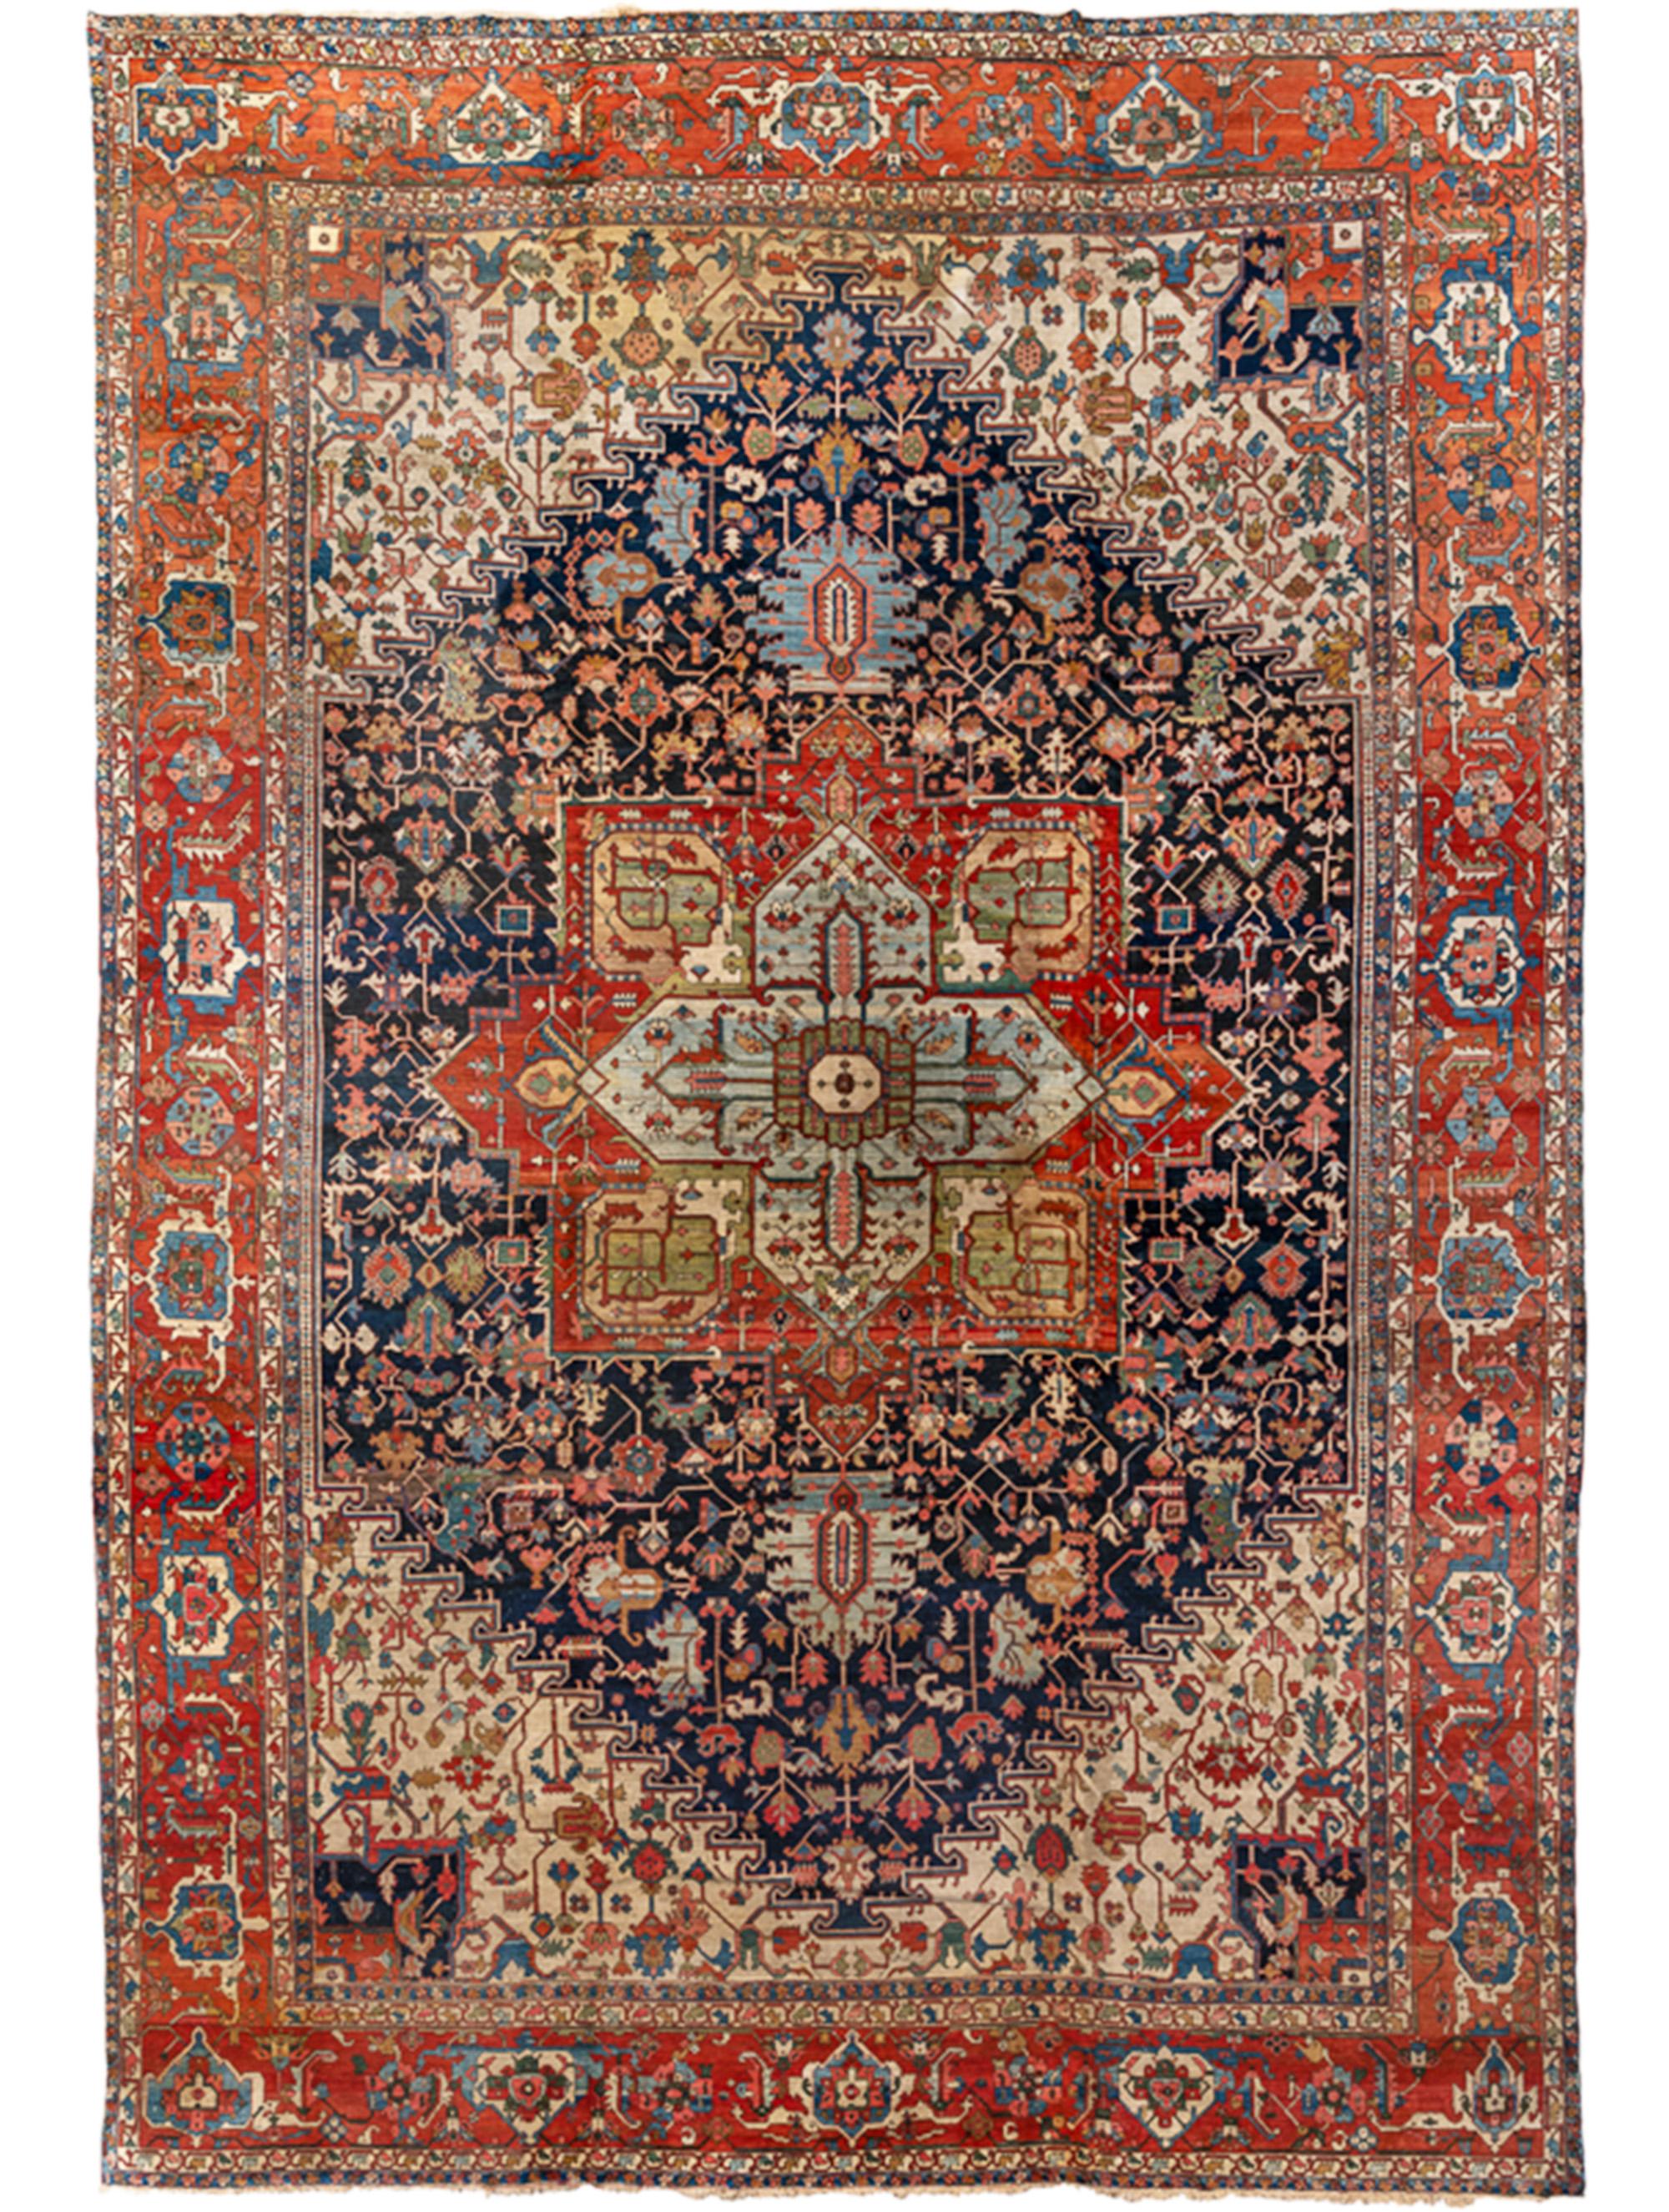 Antique Persian Fine Serapi Handwoven Luxury Wool Rug 14'-8" x 21'-4" Size